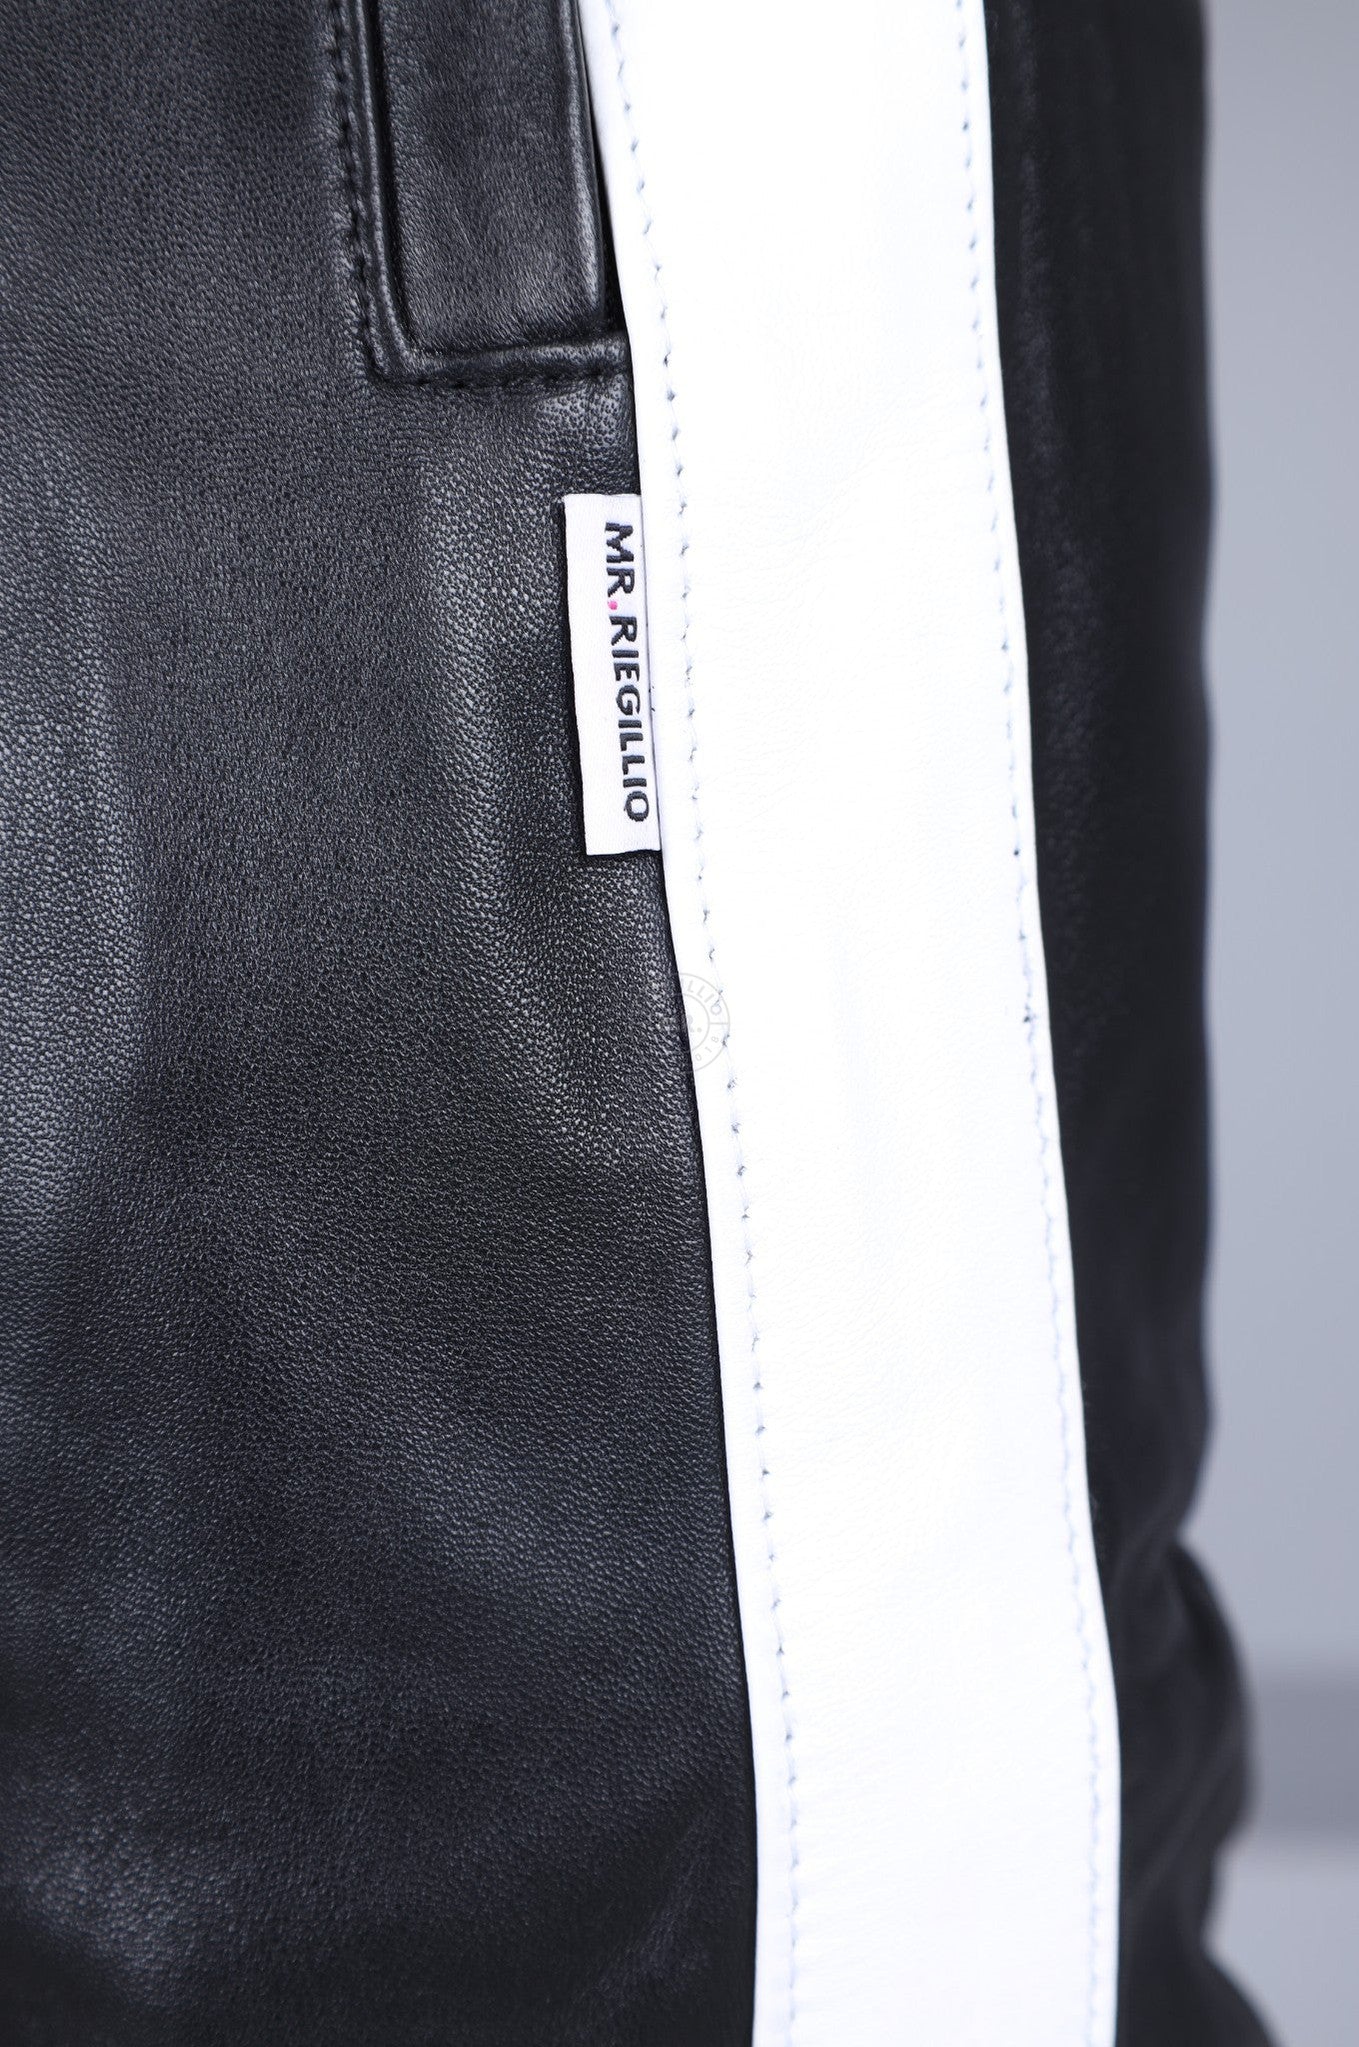 Black Leather Tracksuit Pants - White Stripe at MR. Riegillio